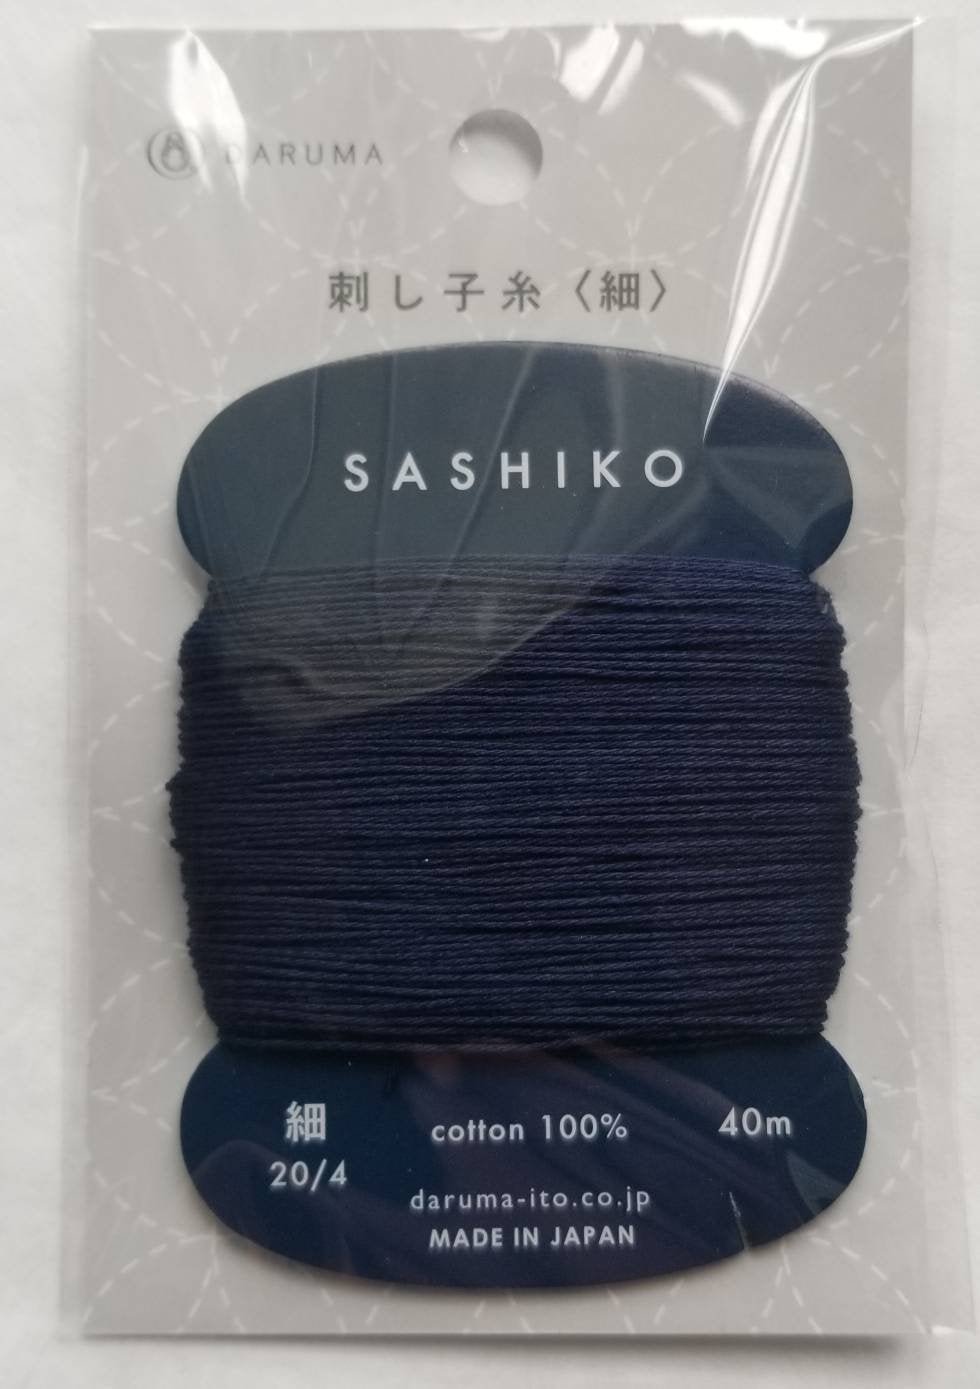 Daruma #216 DEEP INDIGO Japanese Cotton SASHIKO thread 40 meter card 20/4 濃あい deep blue